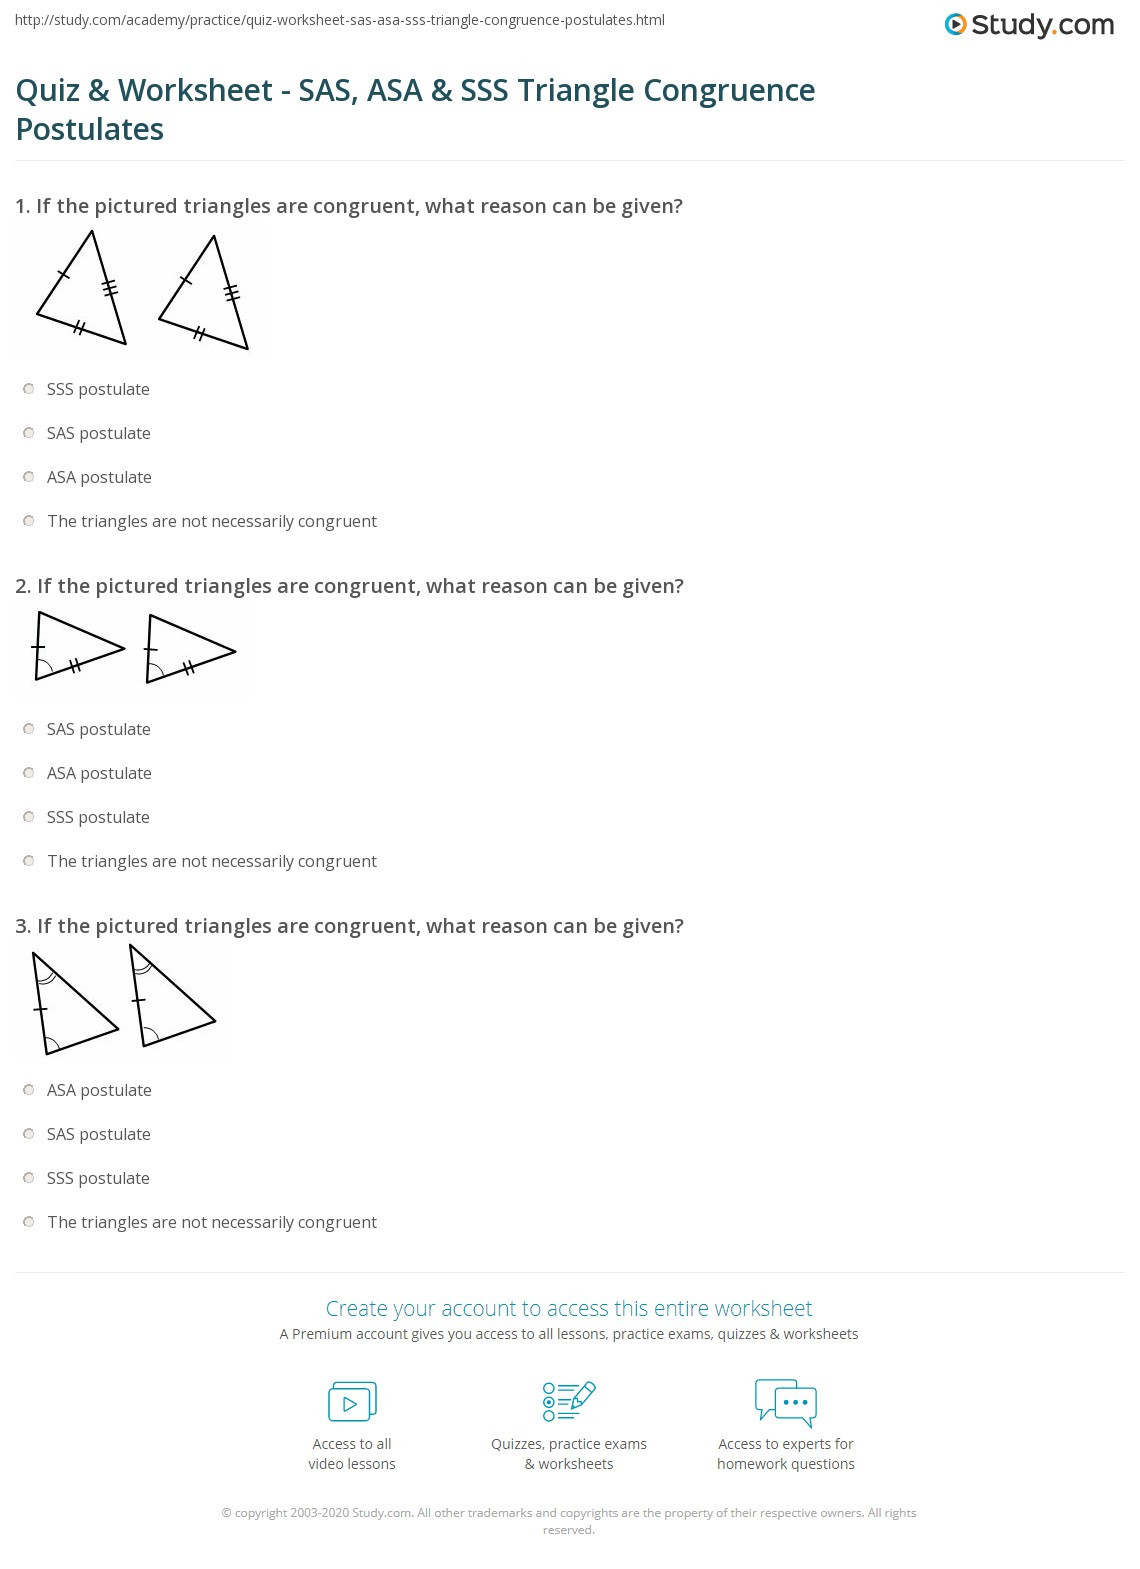 Triangle Congruence Worksheet Answer Key Quiz &amp; Worksheet Sas asa &amp; Sss Triangle Congruence